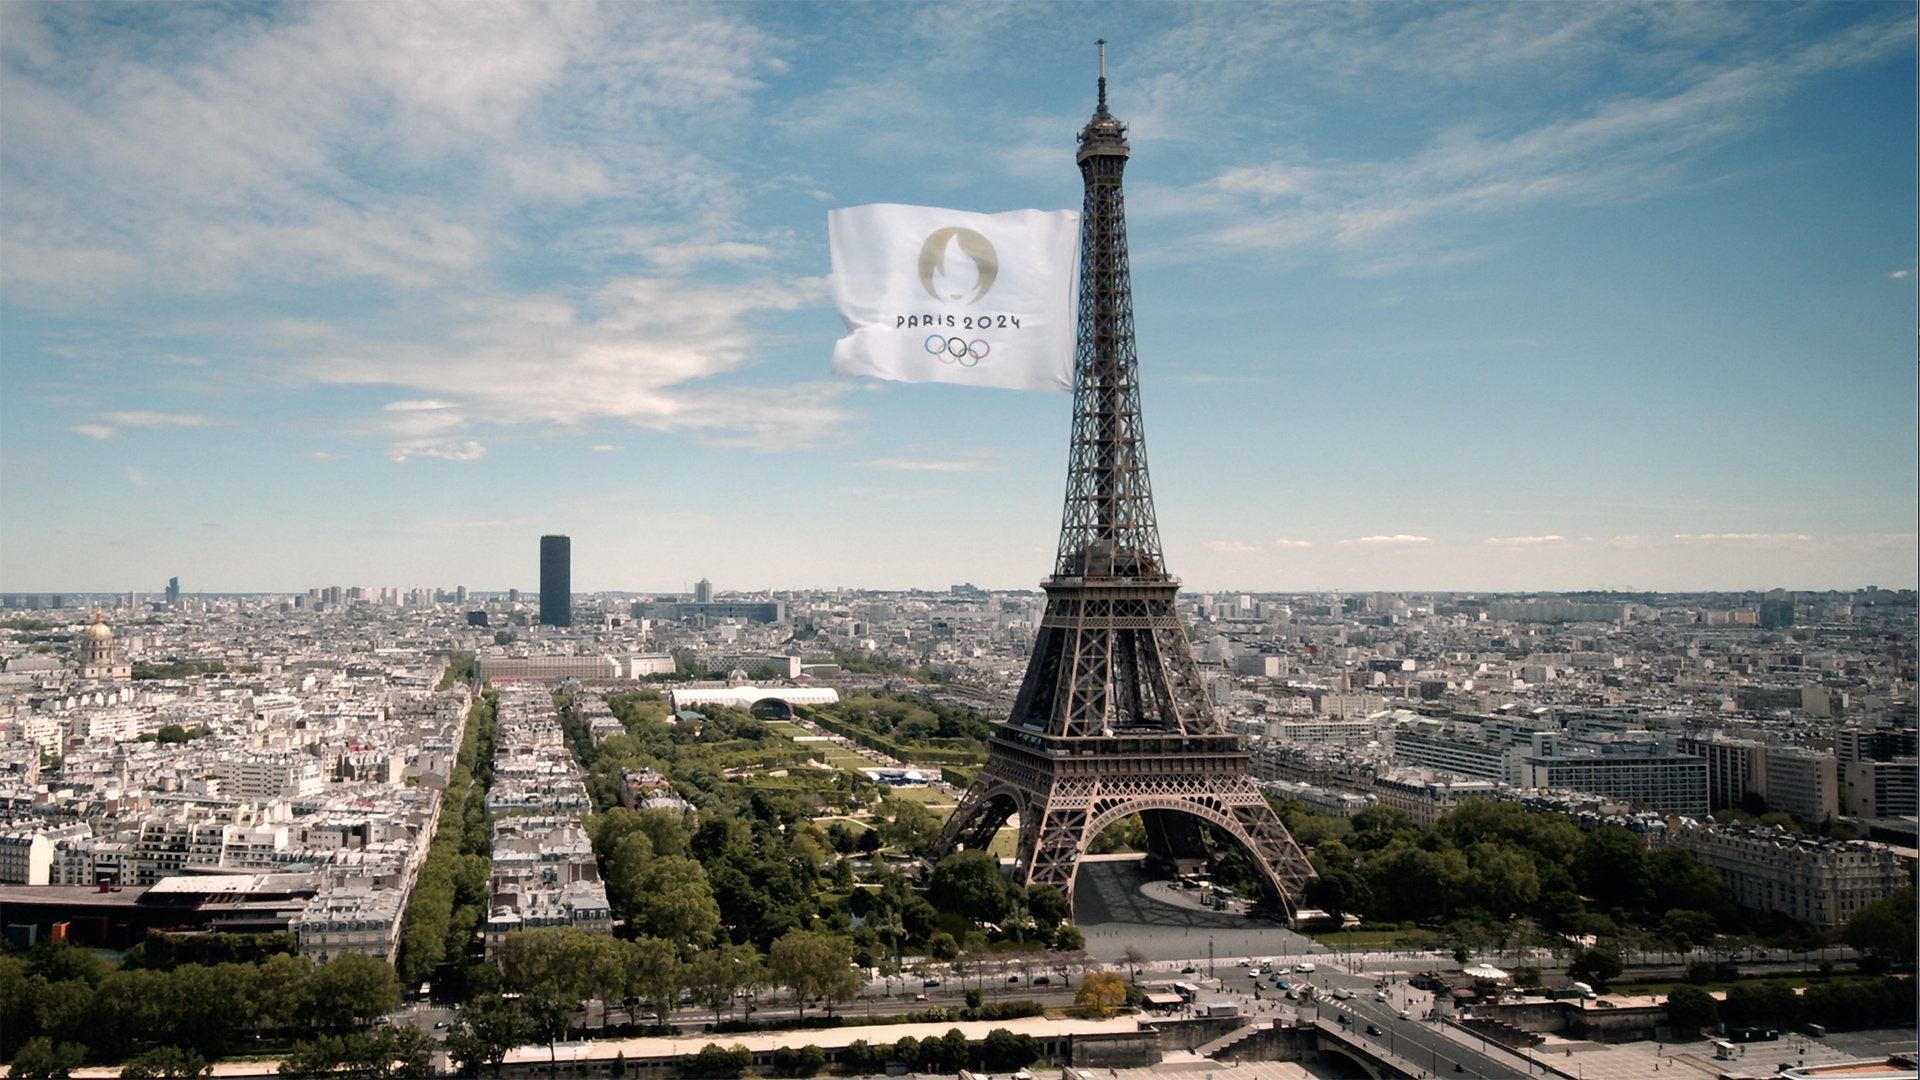 Paris Olympics 2024 Eiffel Tower - Dody Carleen